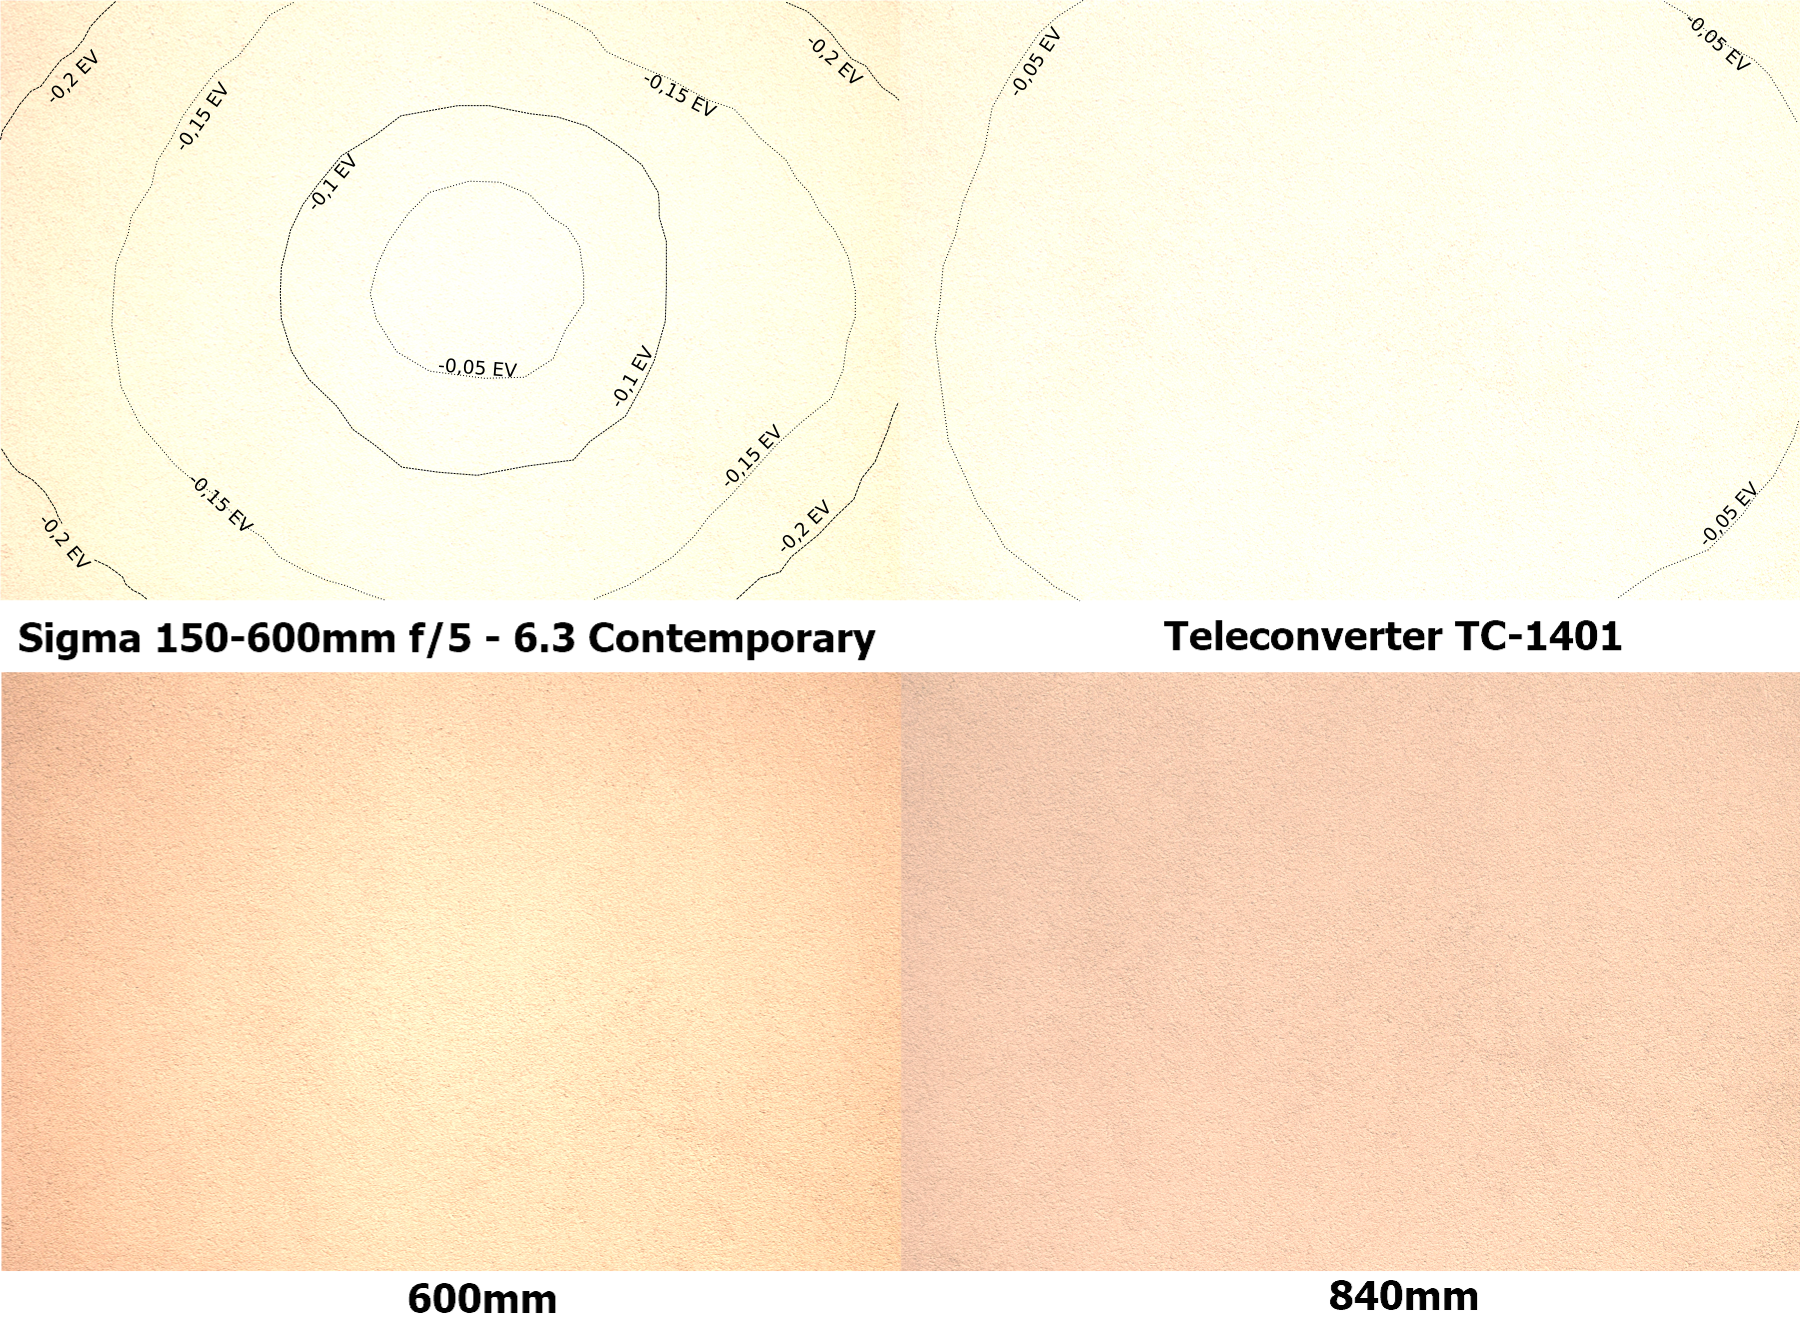 Teleconverter TC-1401 + Sigma 150-600mm C vignetting